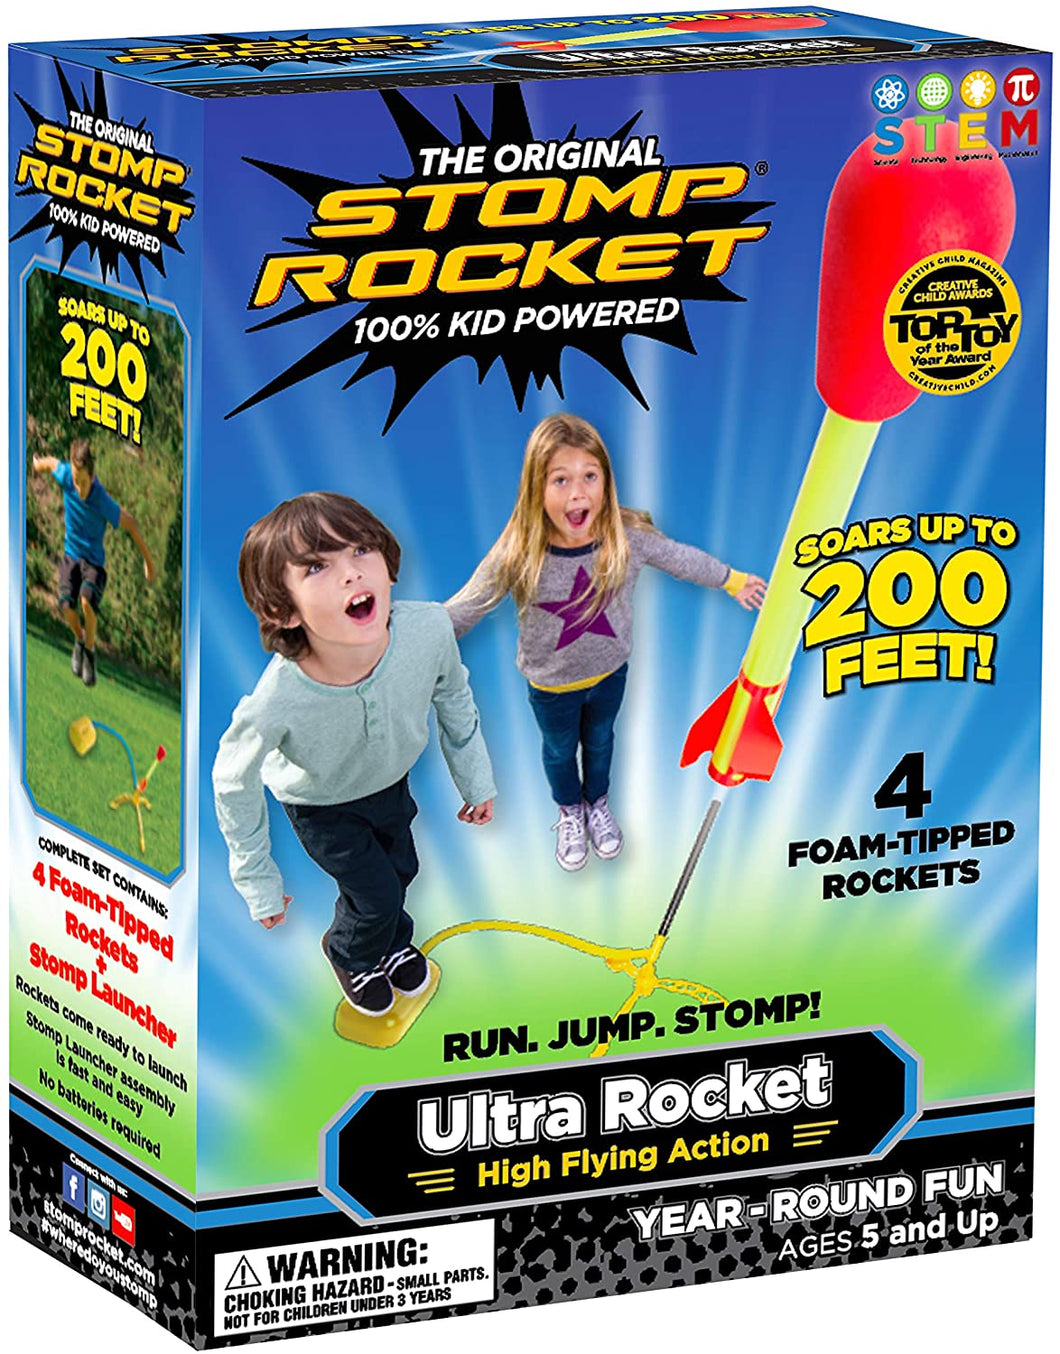 The Original Stomp Rocket